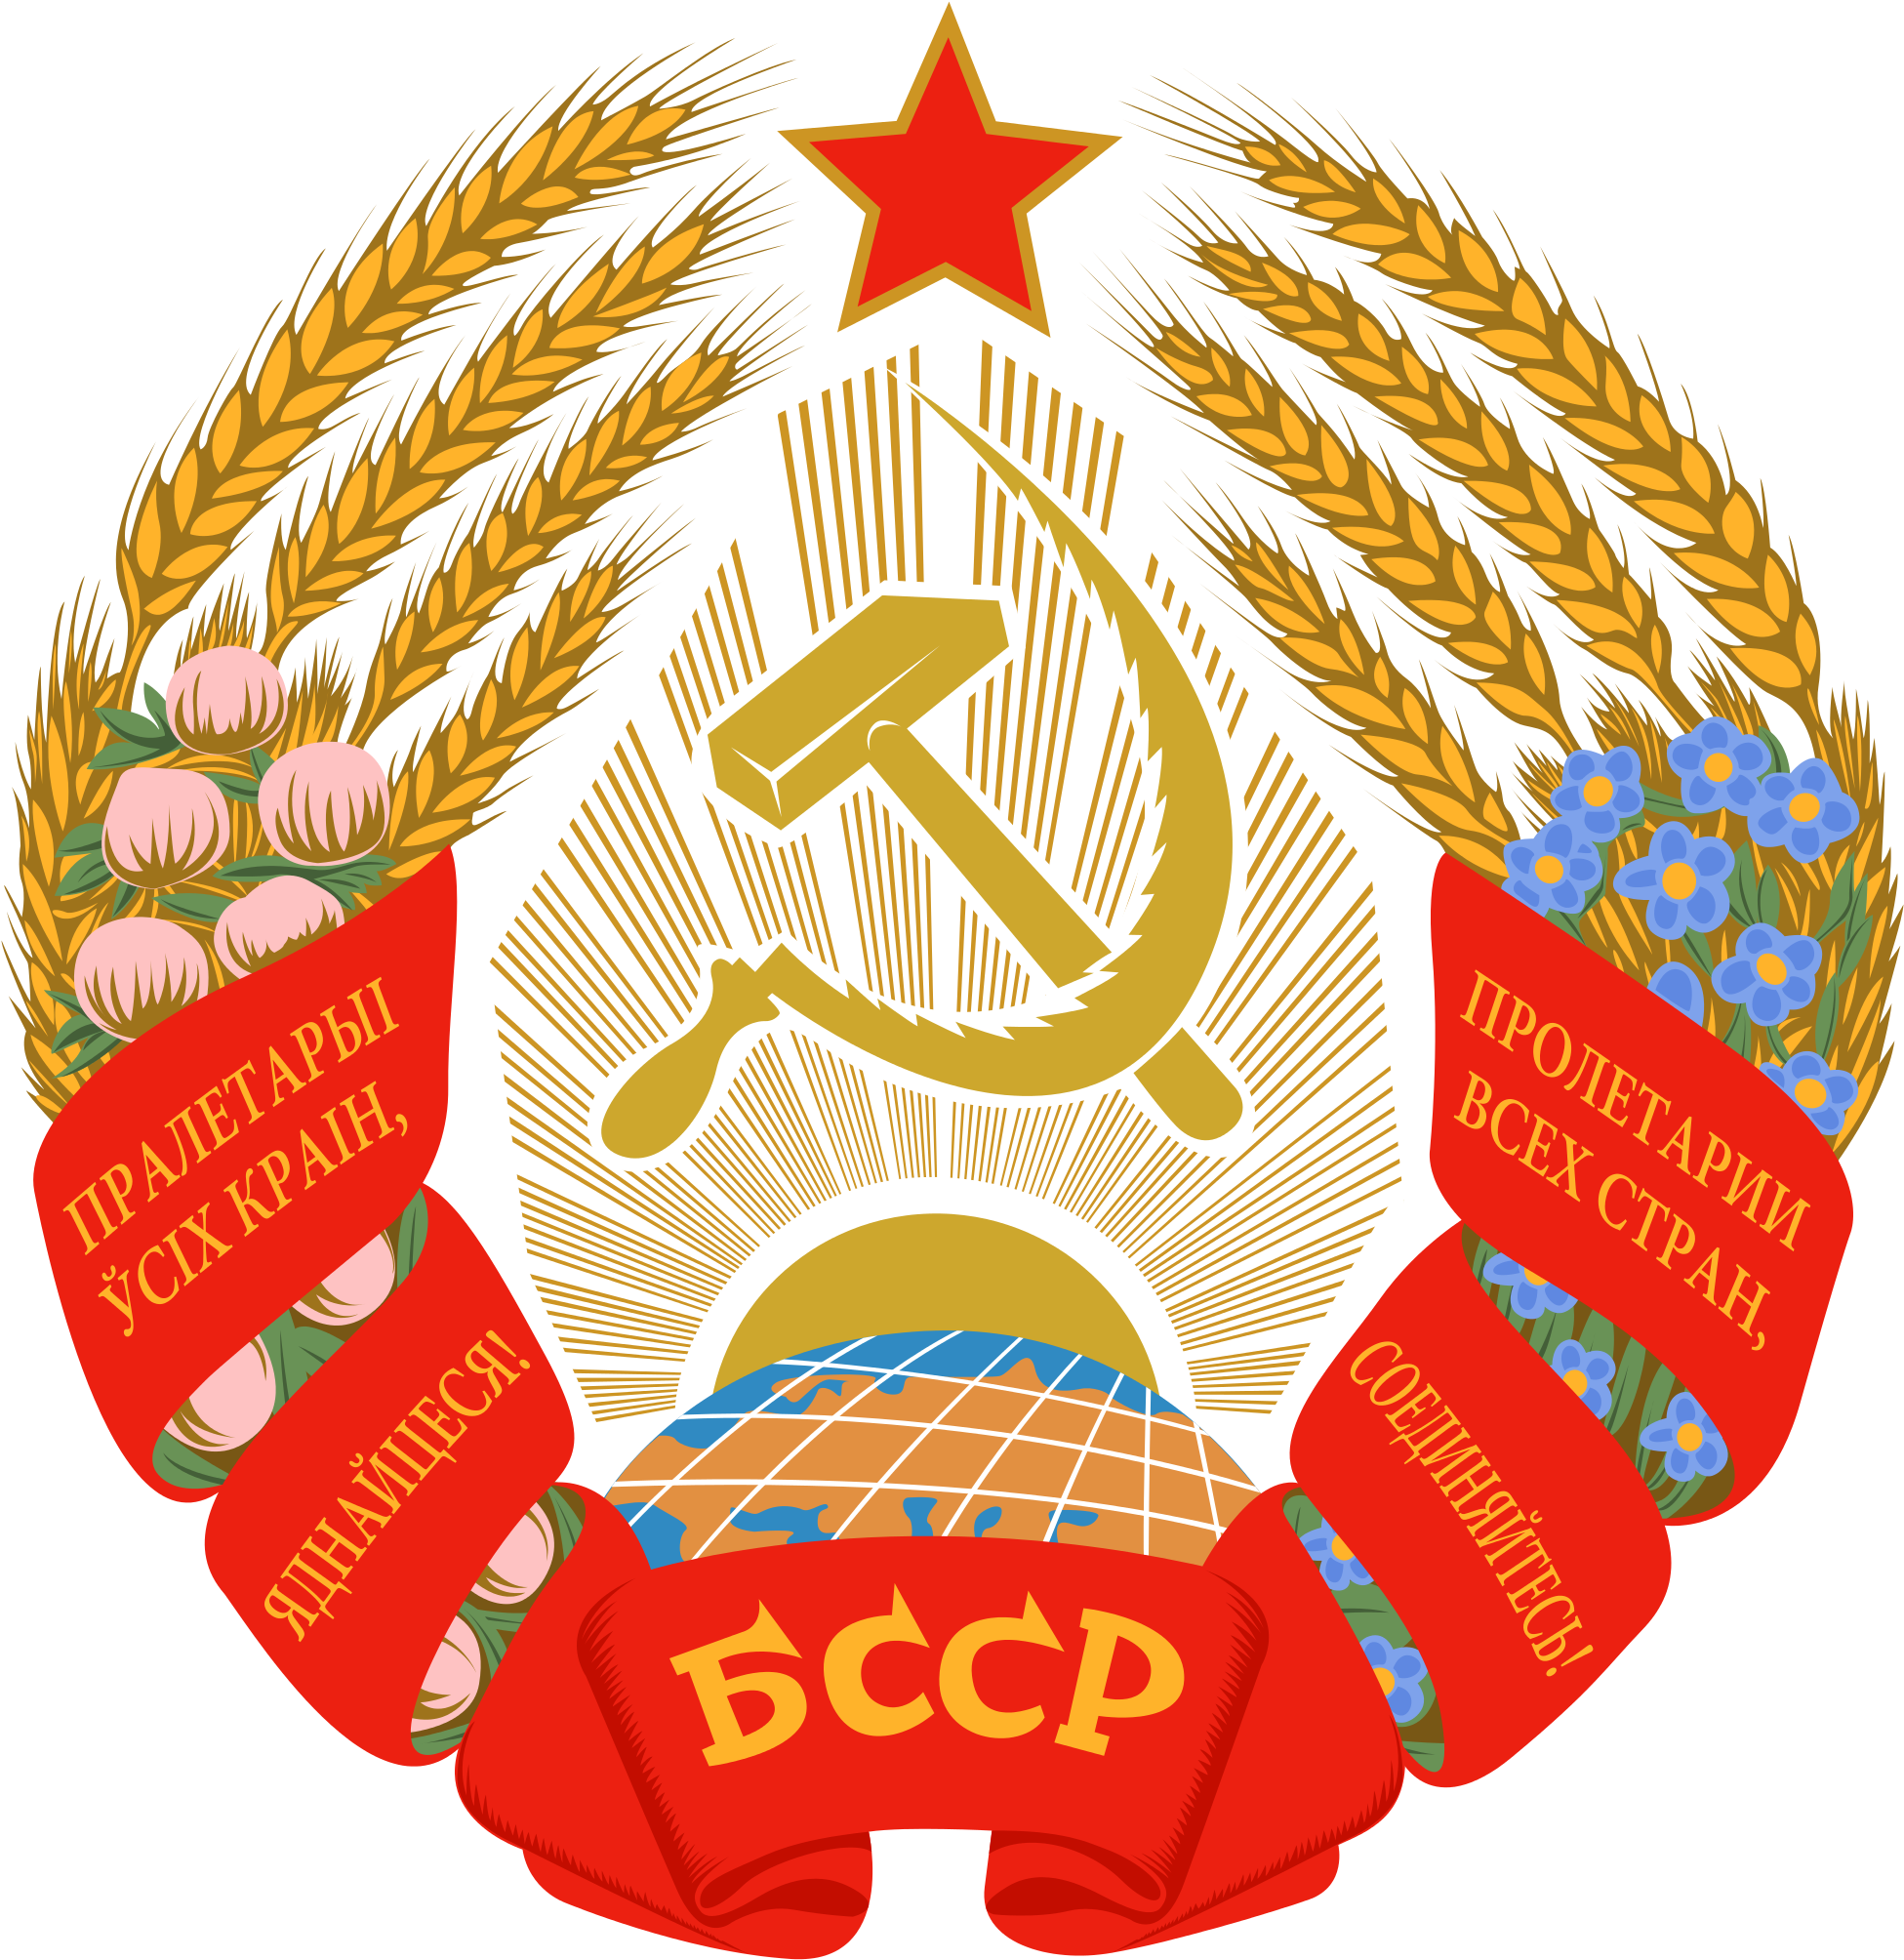 A Symbol Of A Communist Party